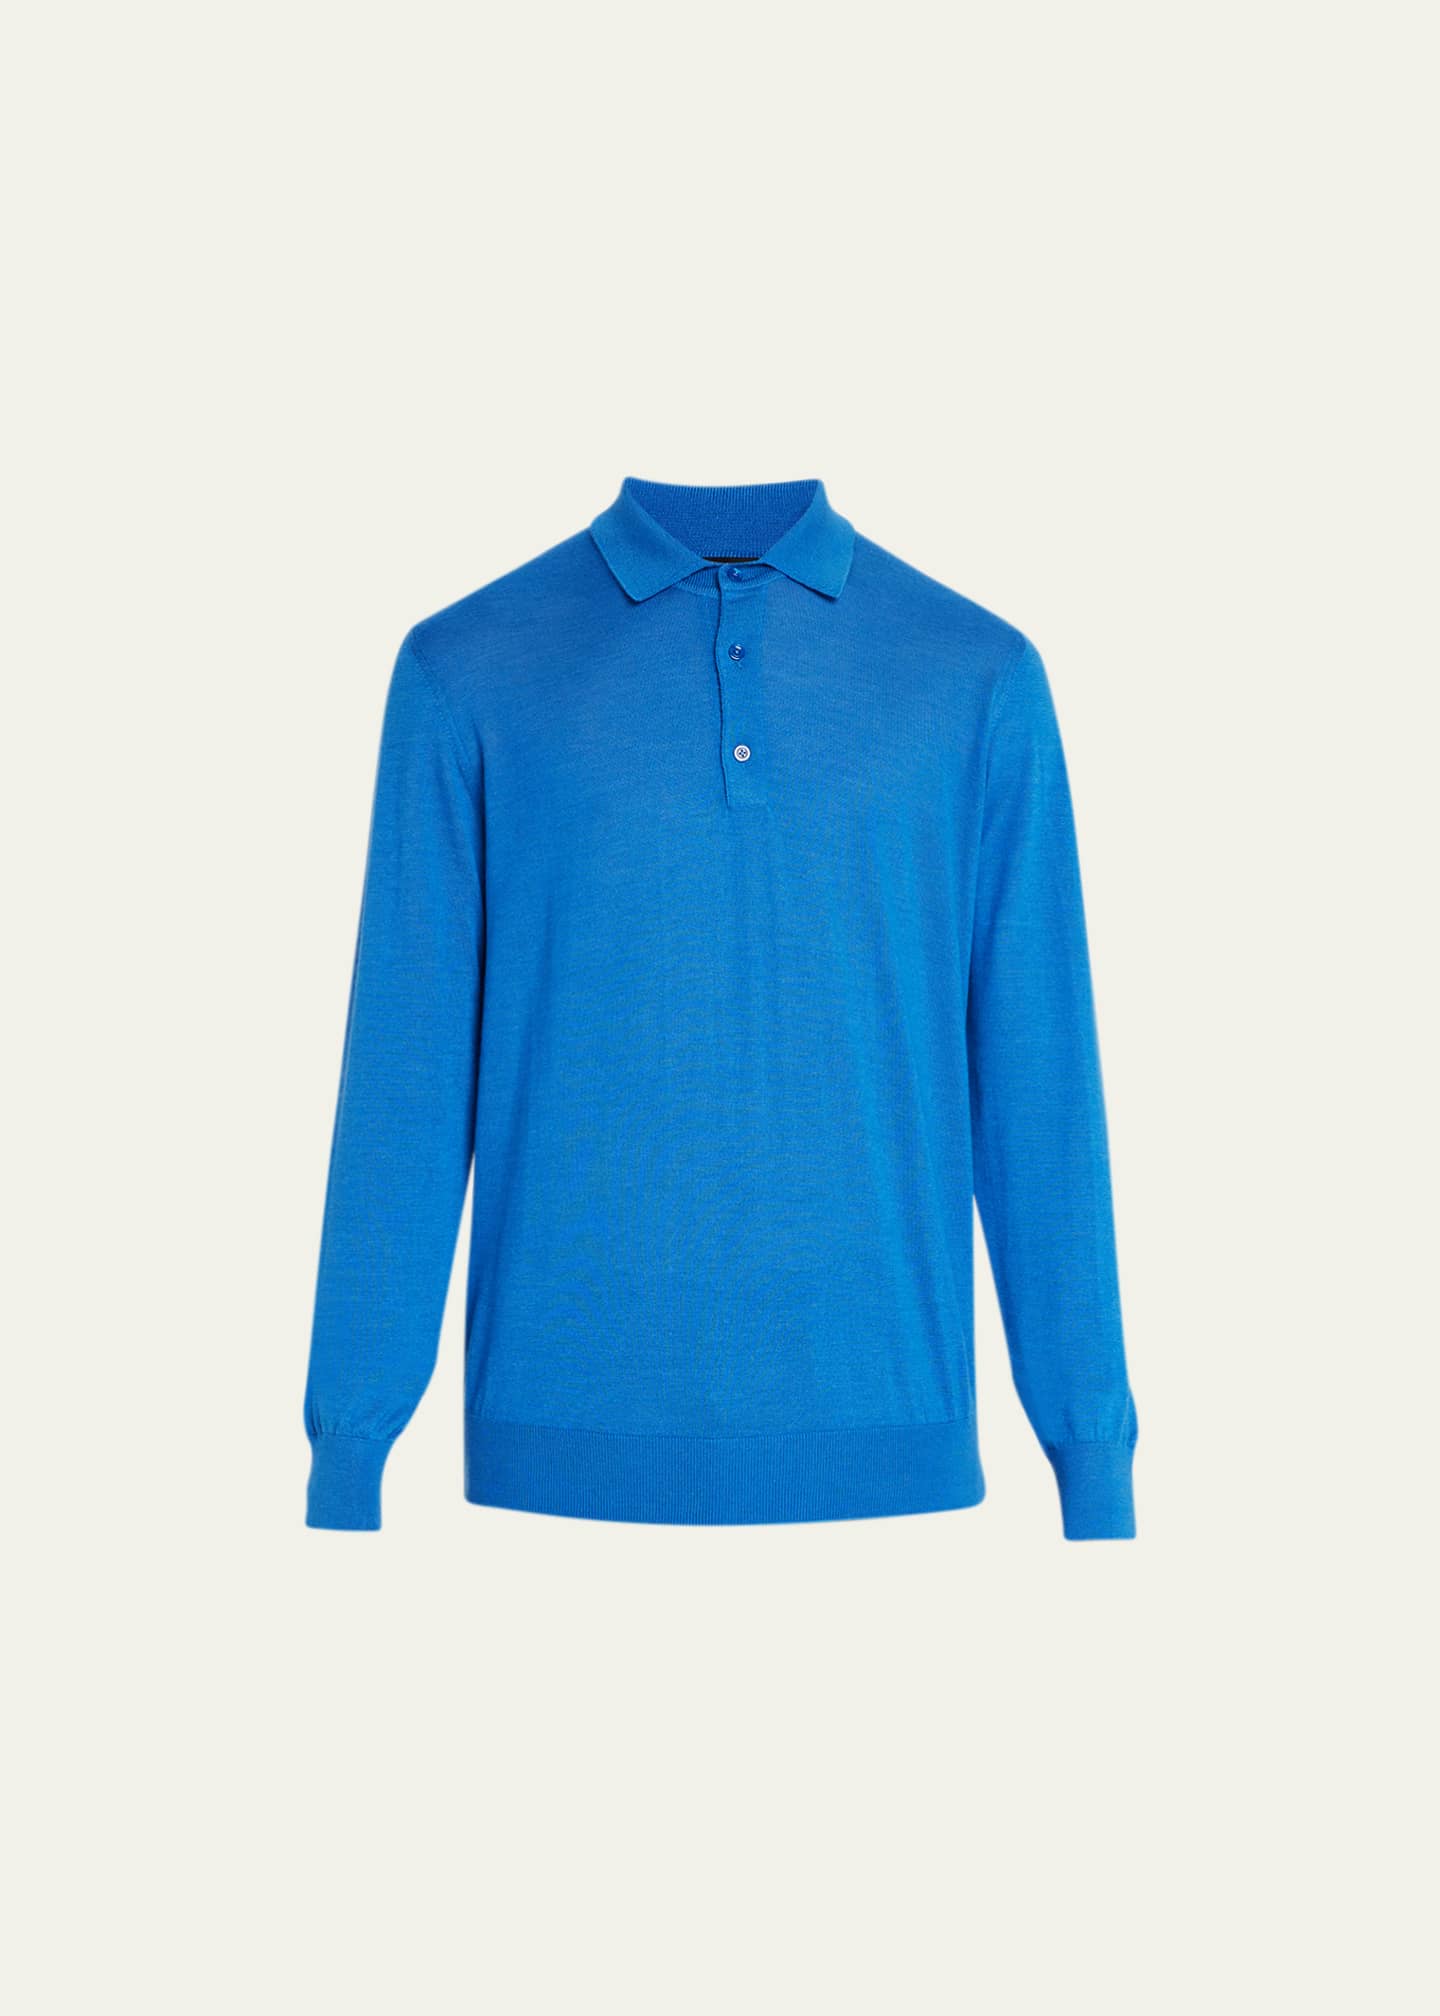 Charvet Men's Solid Long-Sleeve Polo Shirt - Bergdorf Goodman